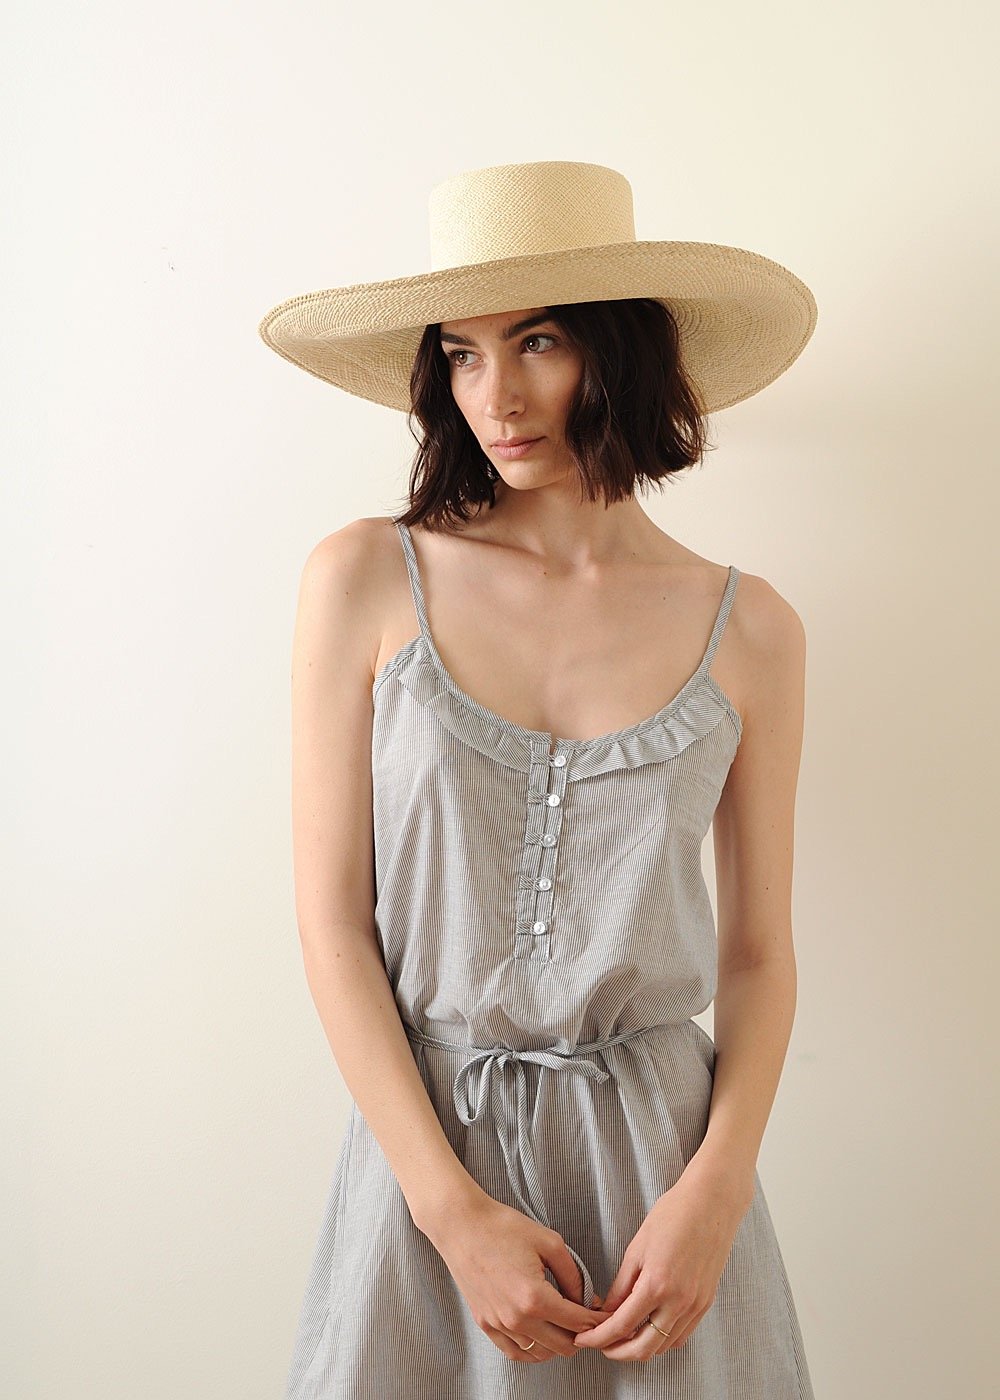 conifer_summer_dress_stripe_hat.jpg